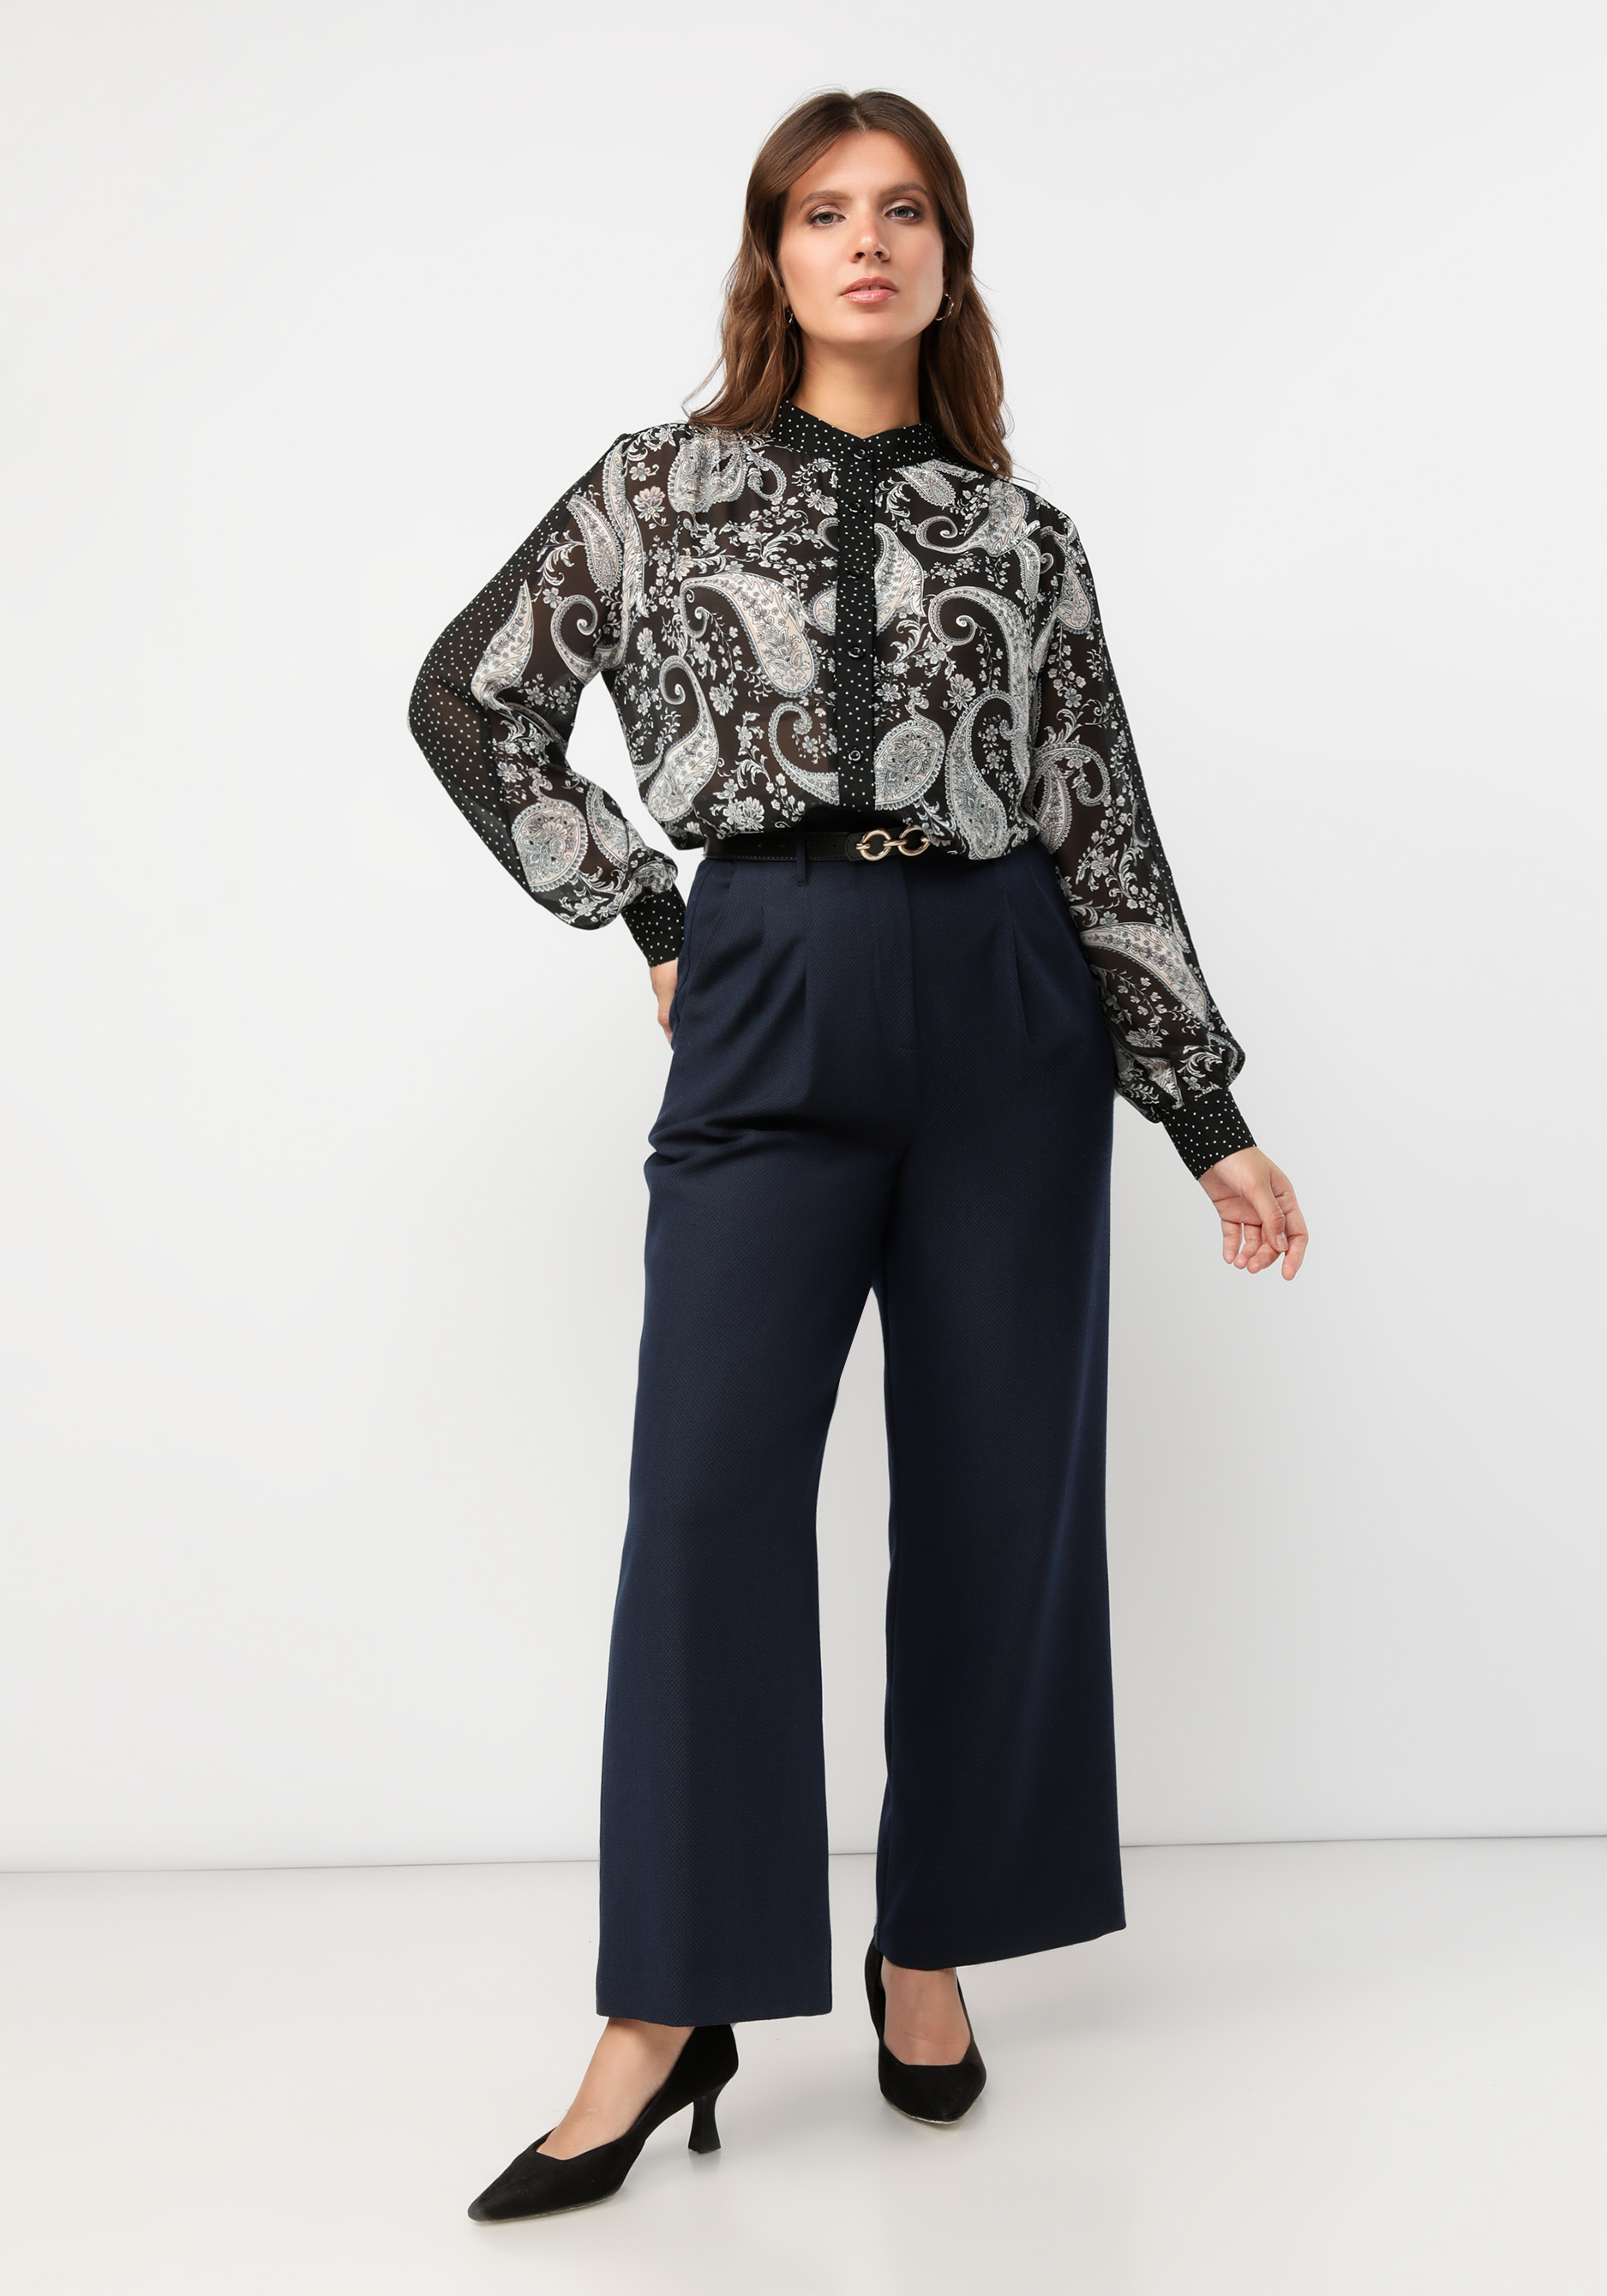 Блуза "Бетани" Bianka Modeno, размер 58, цвет черный - фото 3